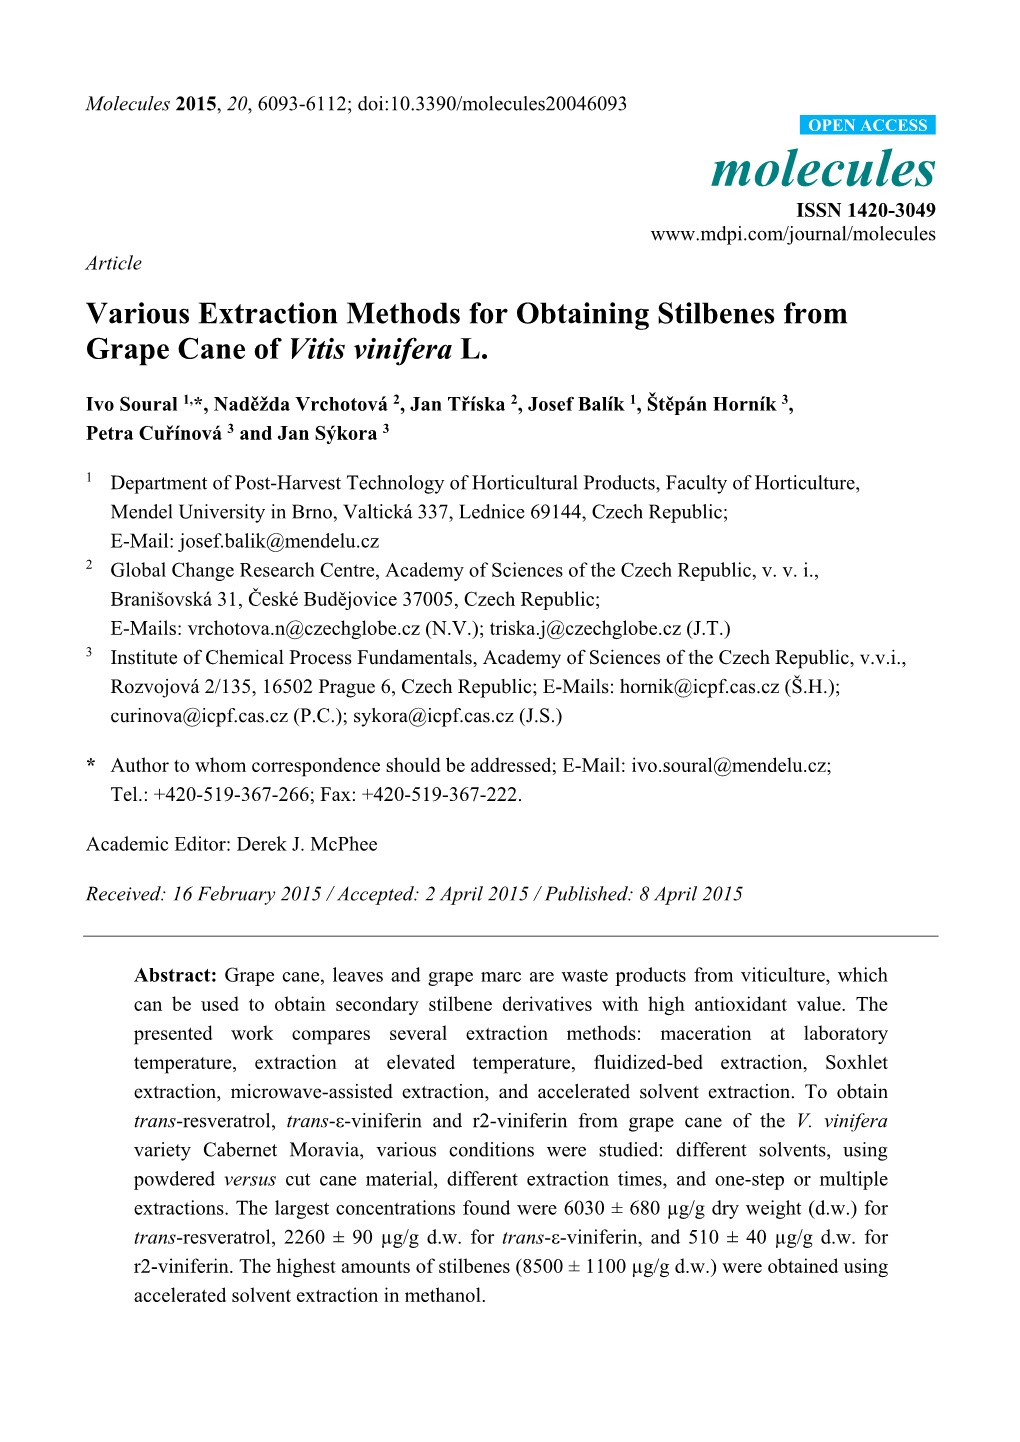 Various Extraction Methods for Obtaining Stilbenes from Grape Cane of Vitis Vinifera L